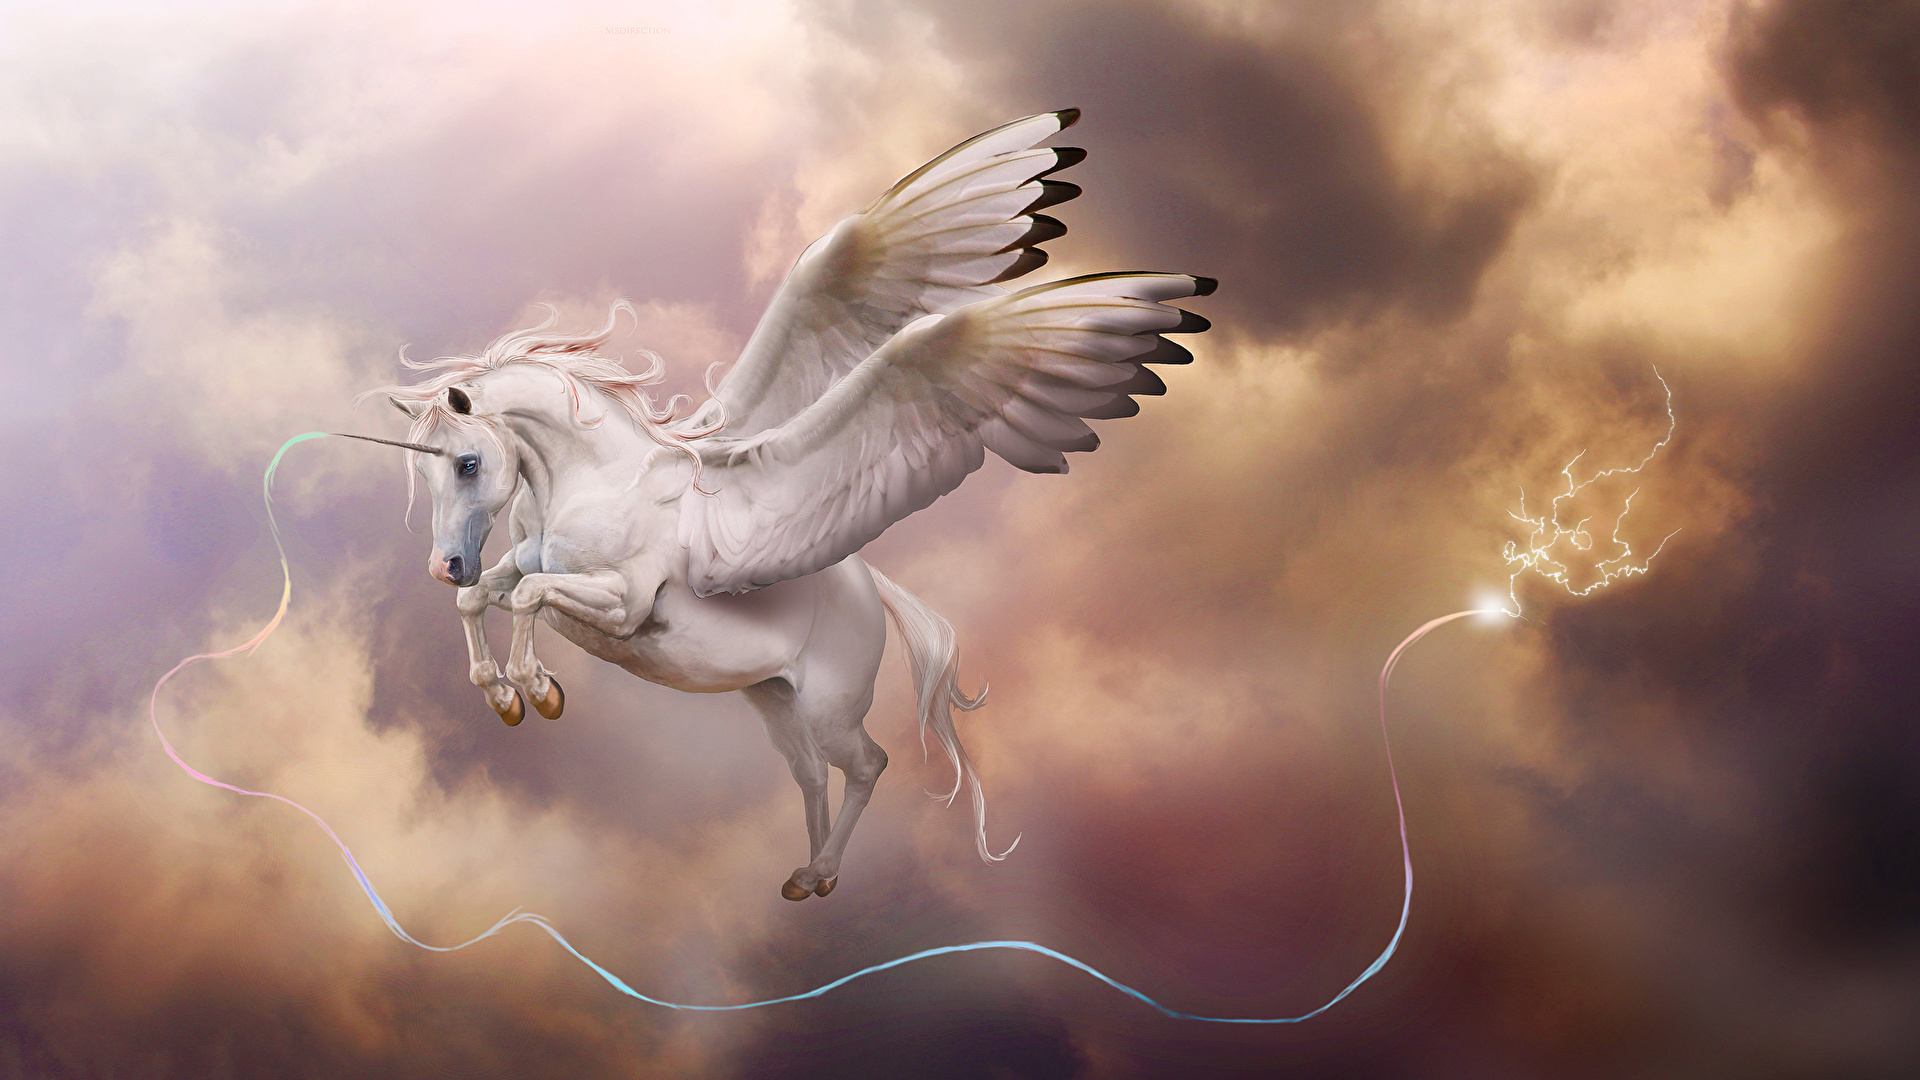 Pegasus Spirit  4k wallpaper by DanDrawDesign on DeviantArt